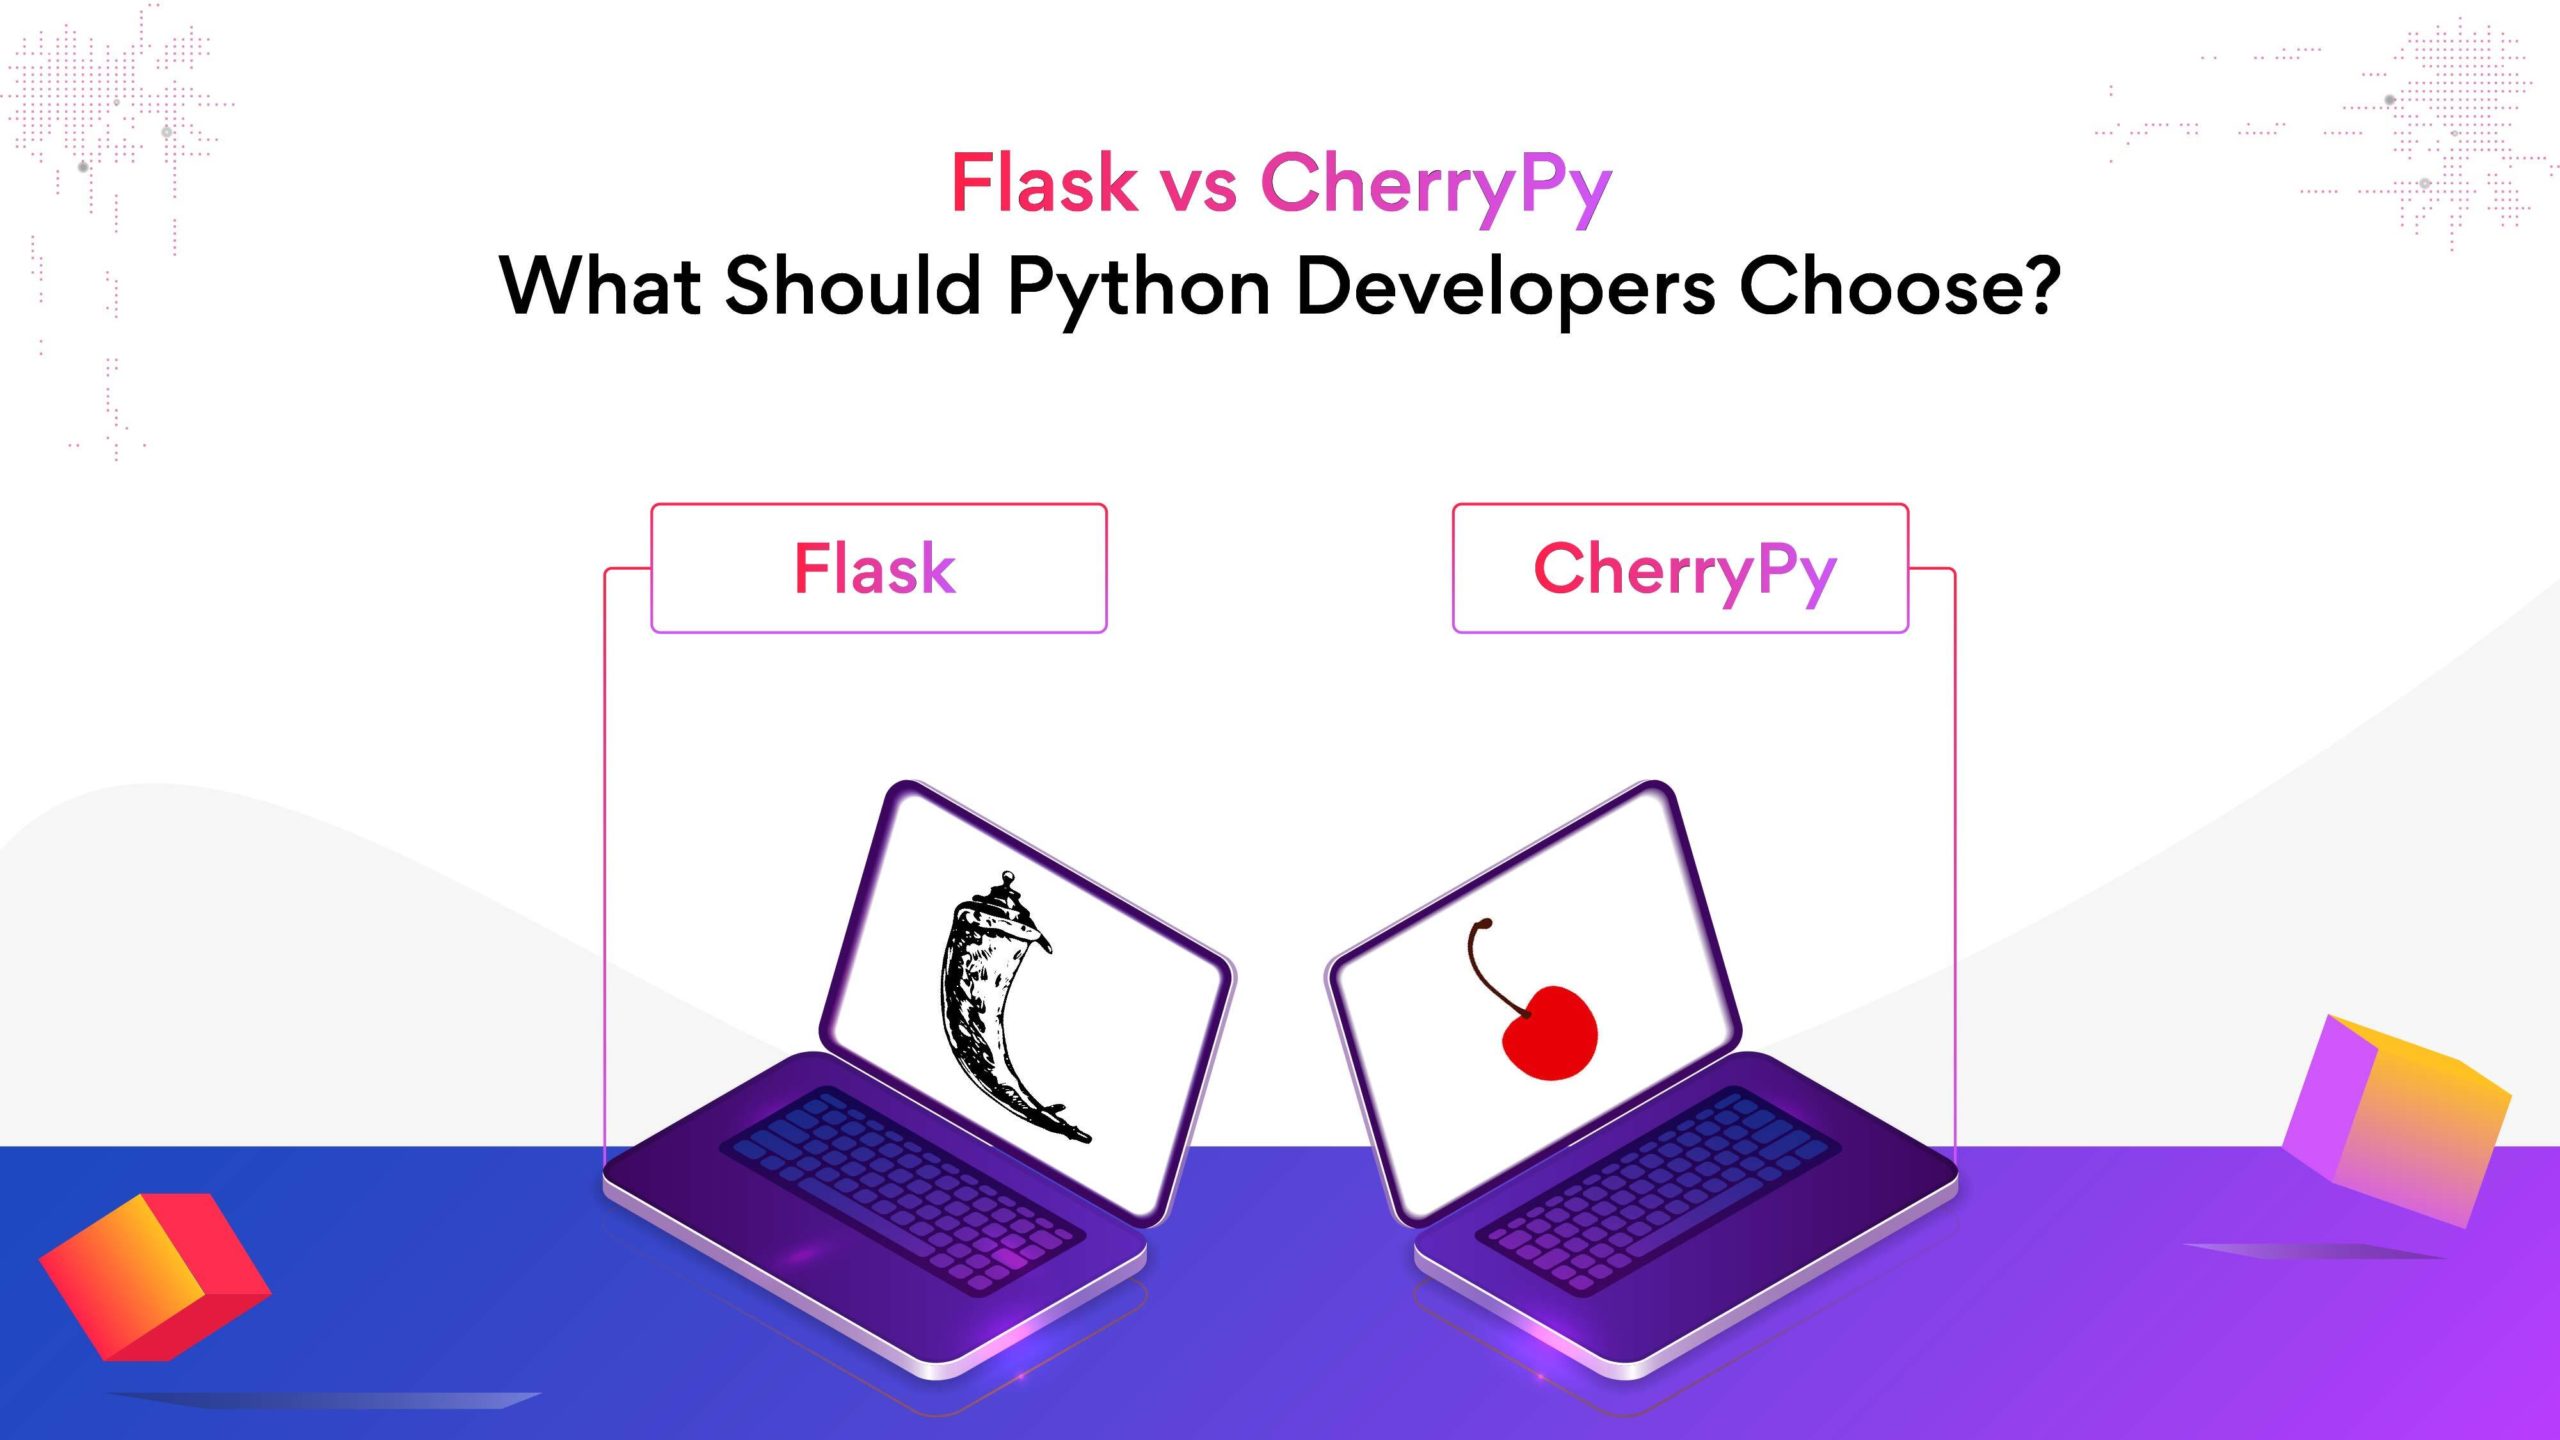 CherryPy vs Flask